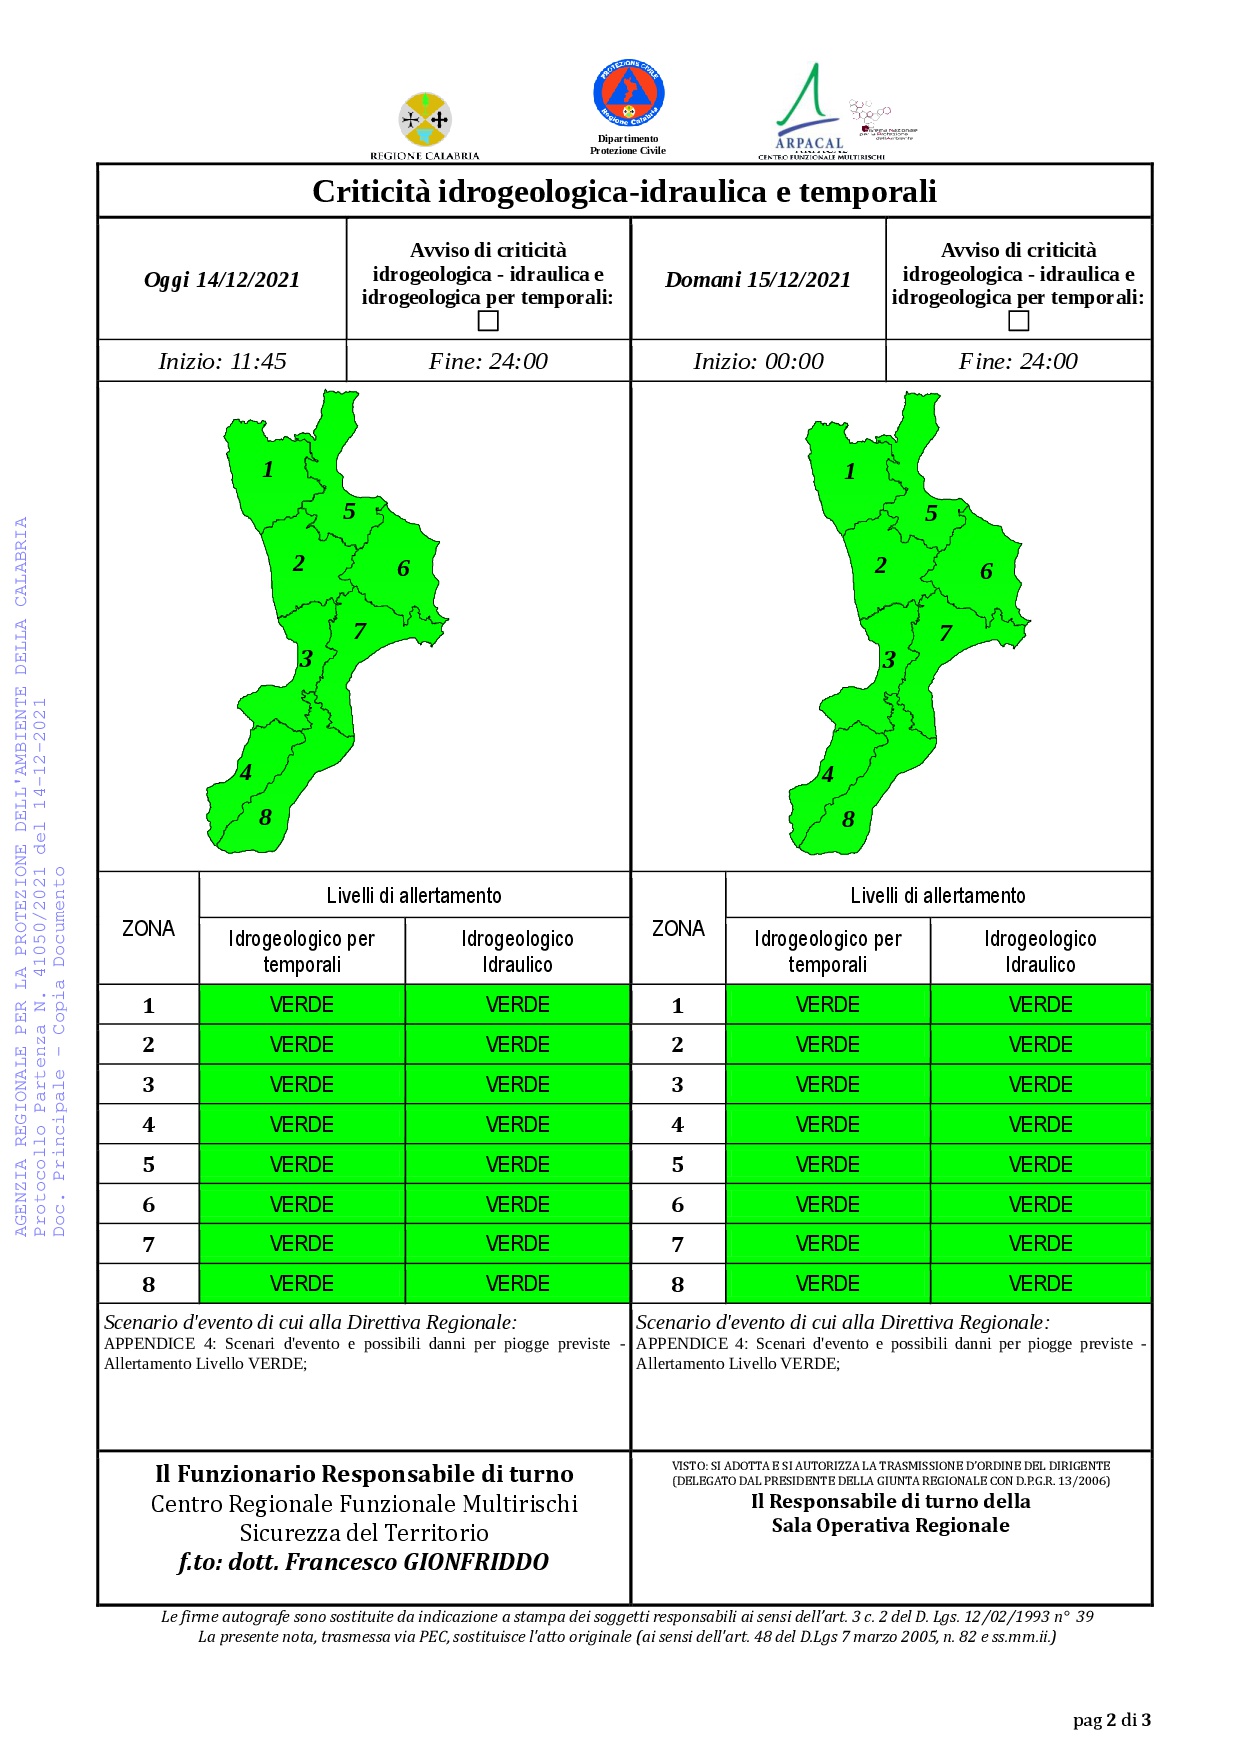 Criticità idrogeologica-idraulica e temporali in Calabria 14-12-2021